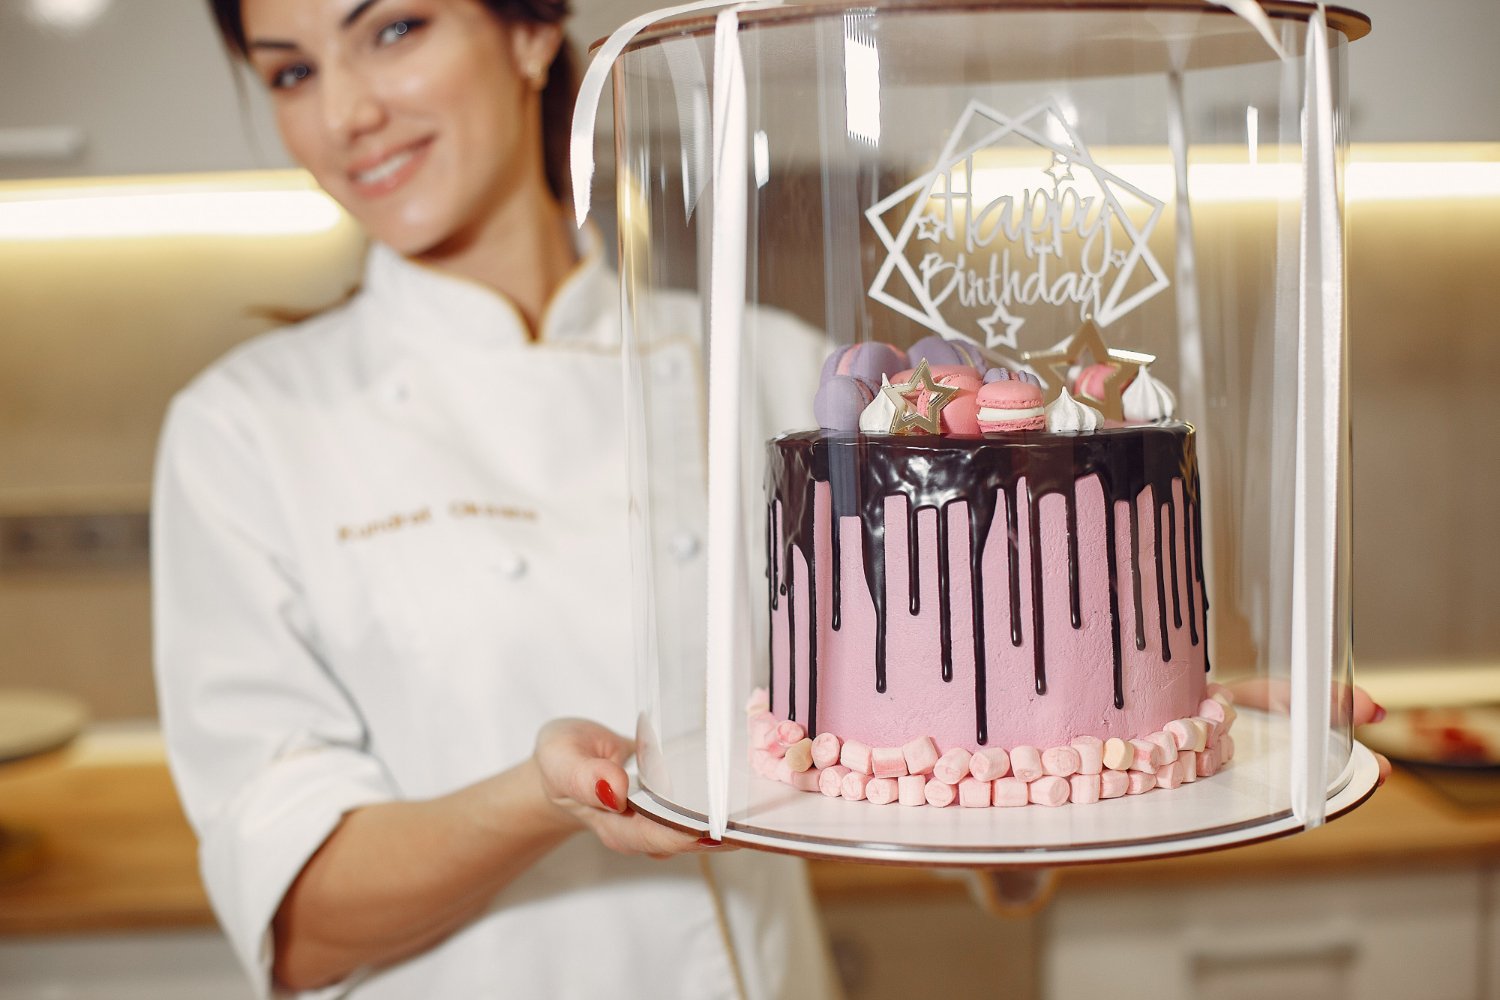 photo confectioner in a uniform decorates the cake